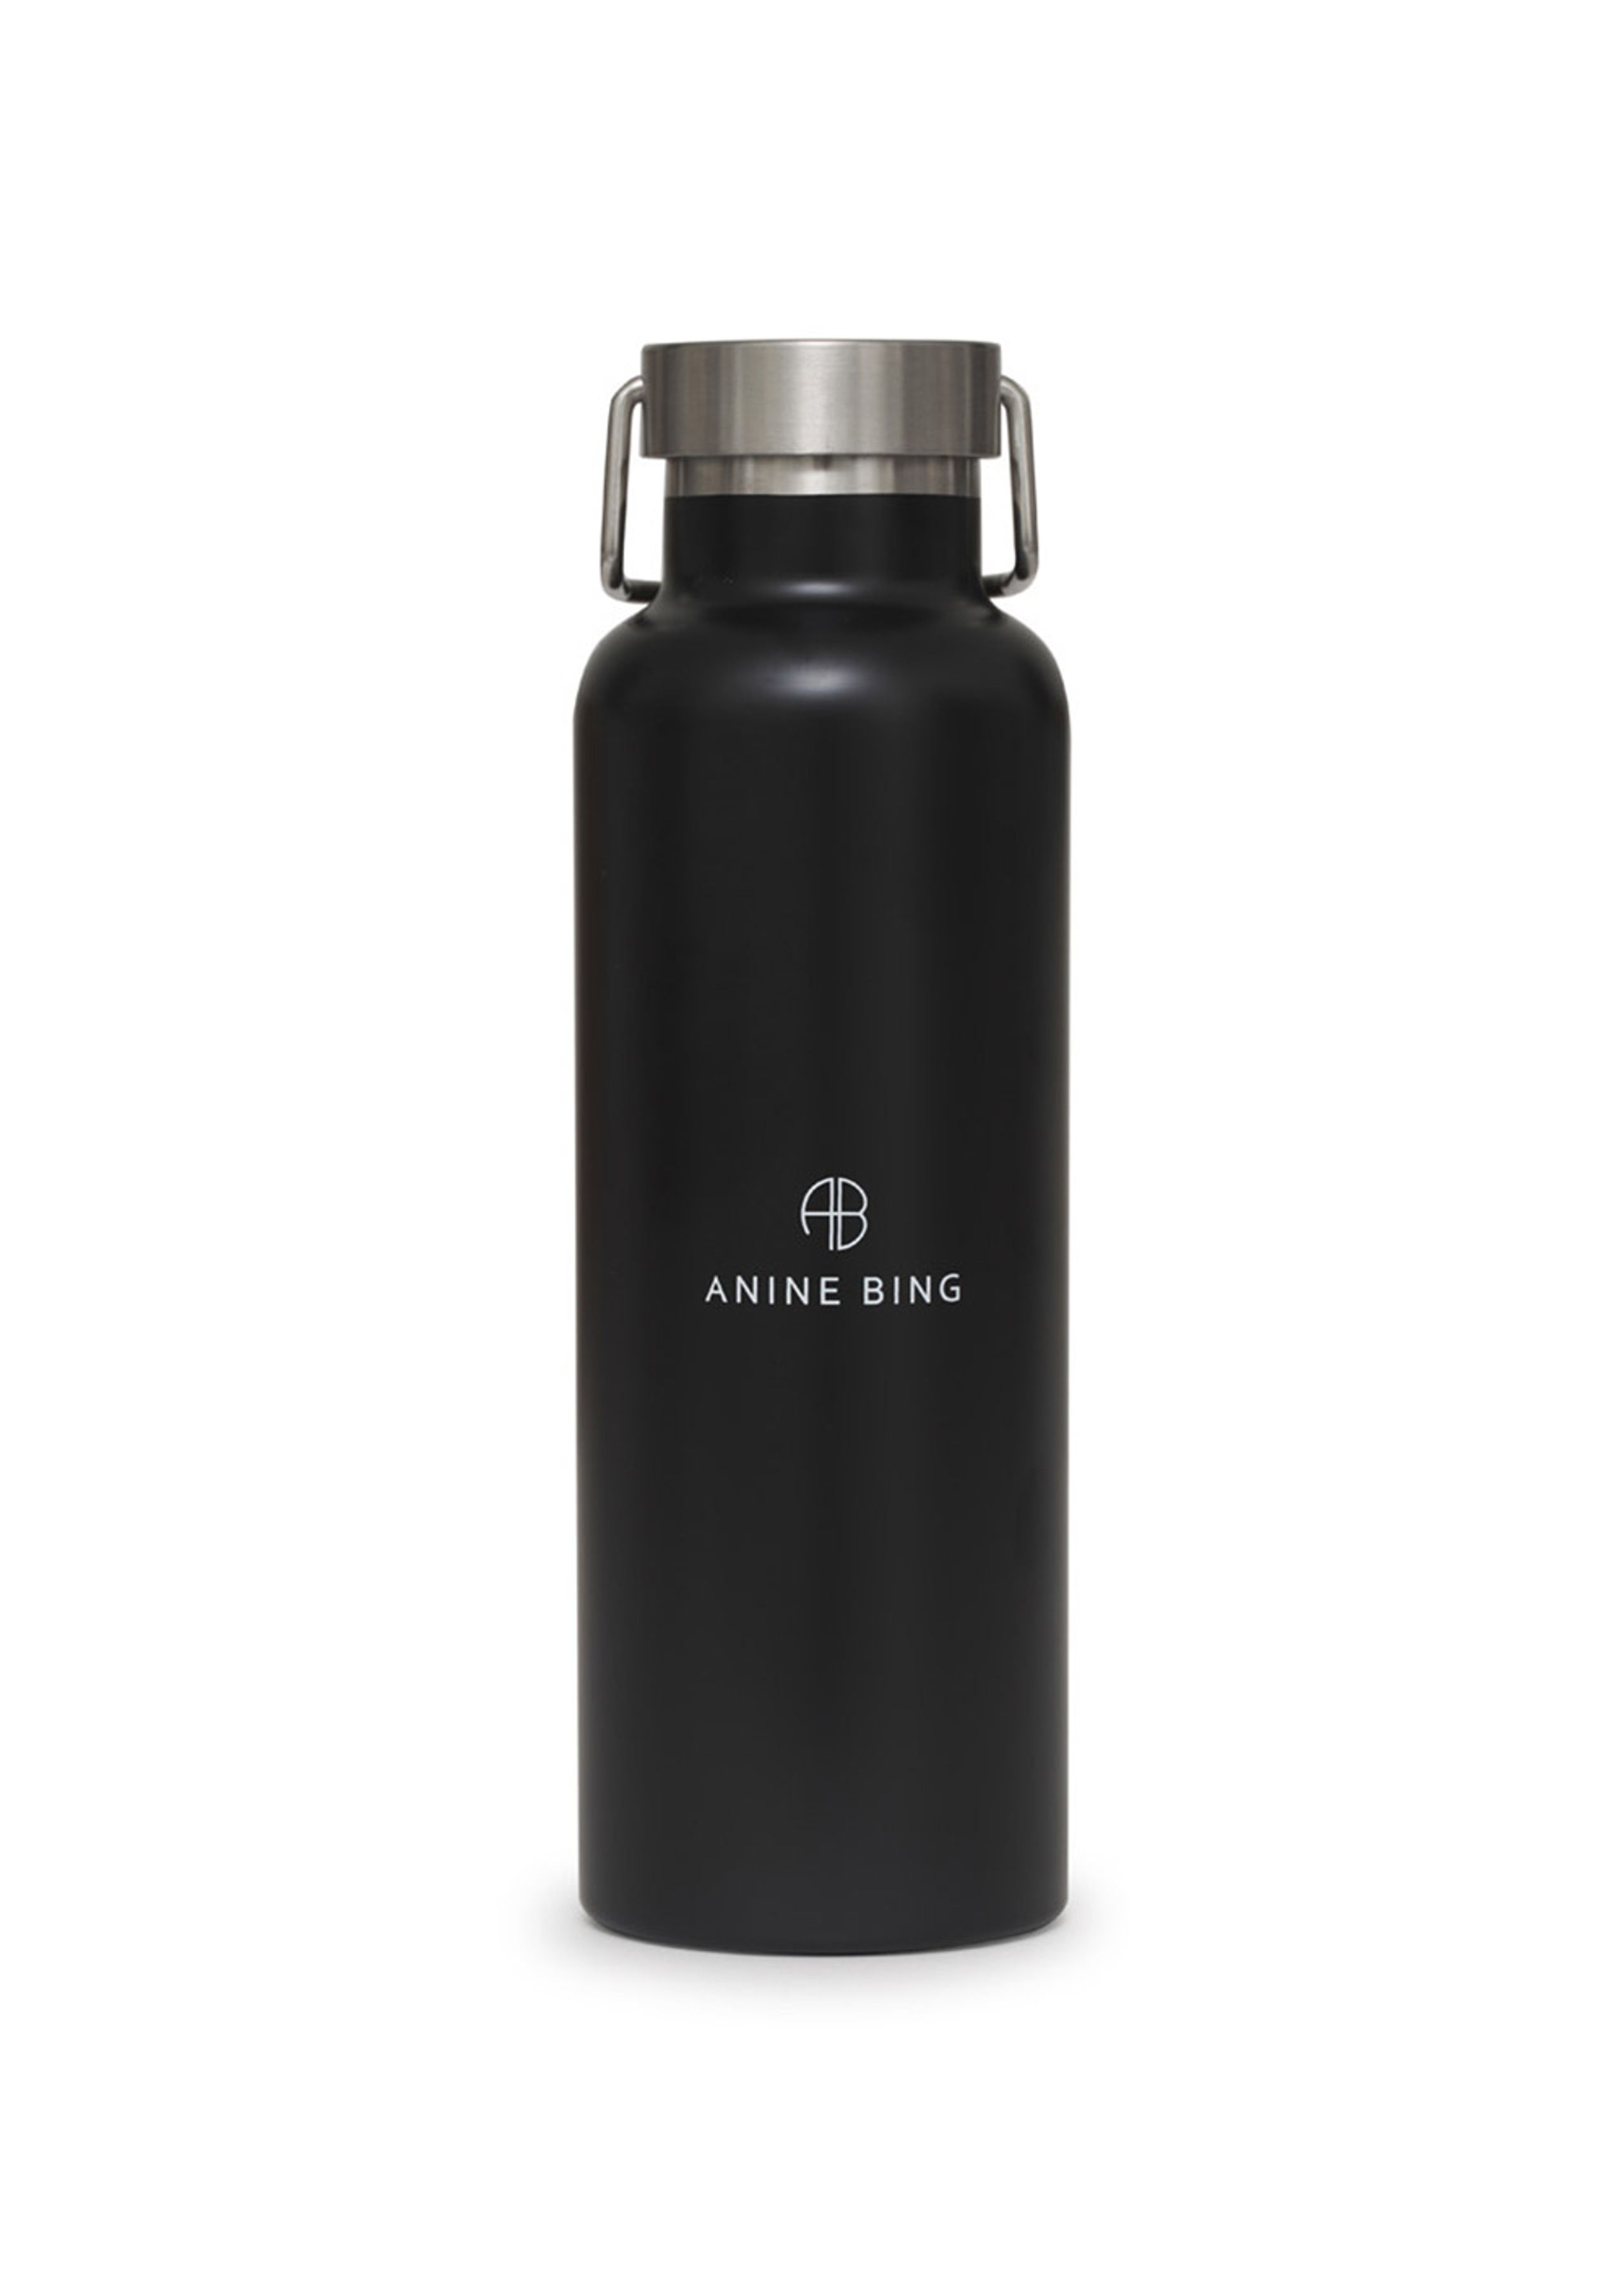 Anine Bing - Waterfles - AB Water Bottle - Black